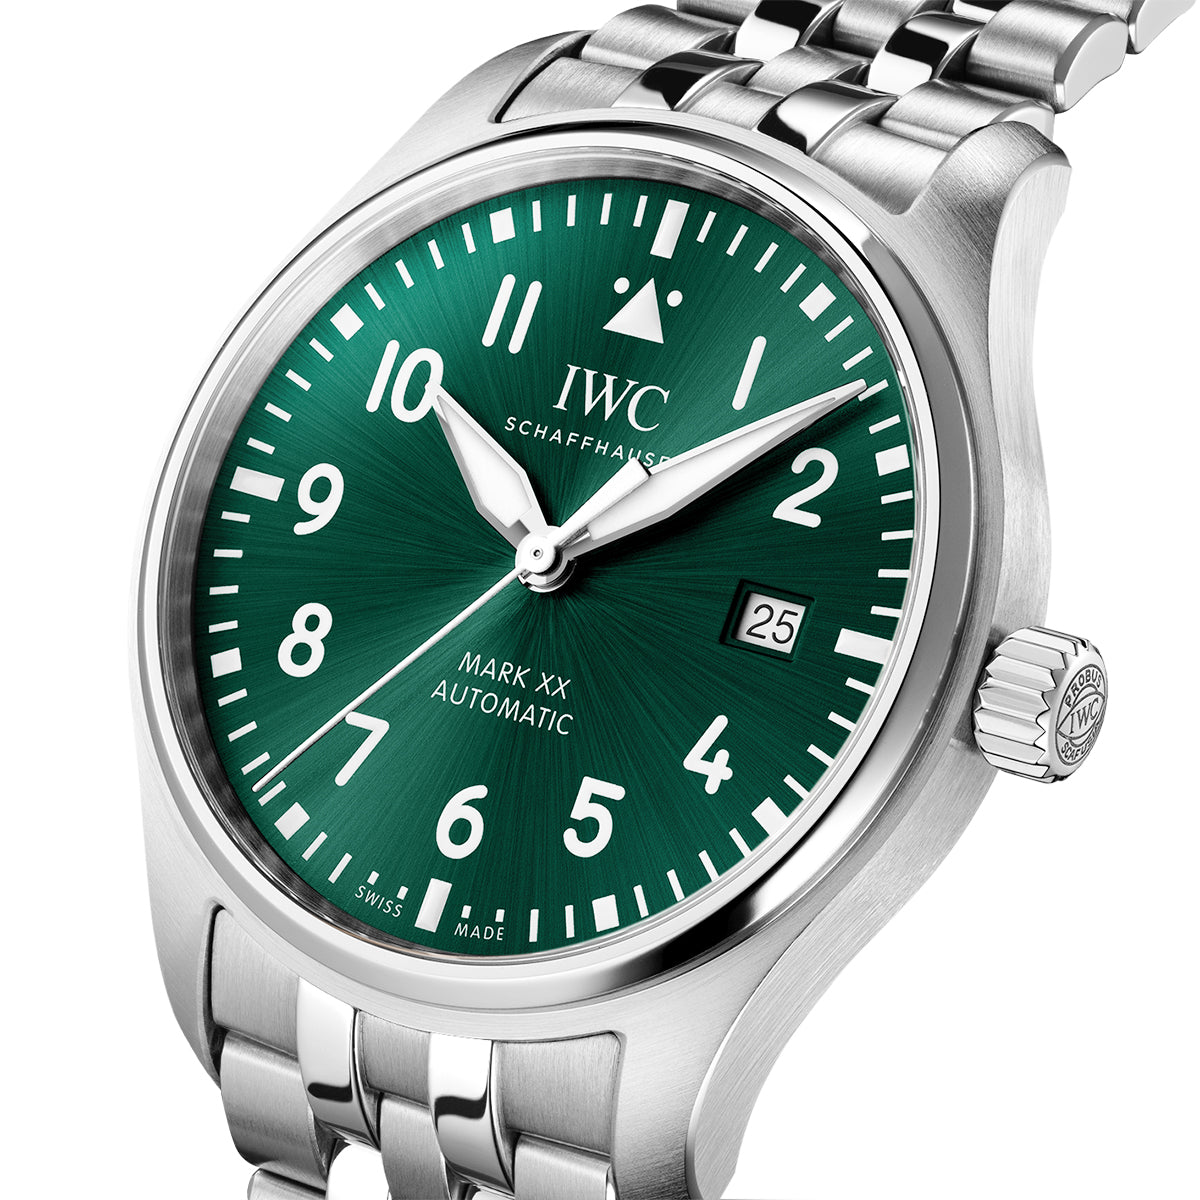 Pilot's Mark XX 40mm Green Dial Men's Automatic Bracelet Watch